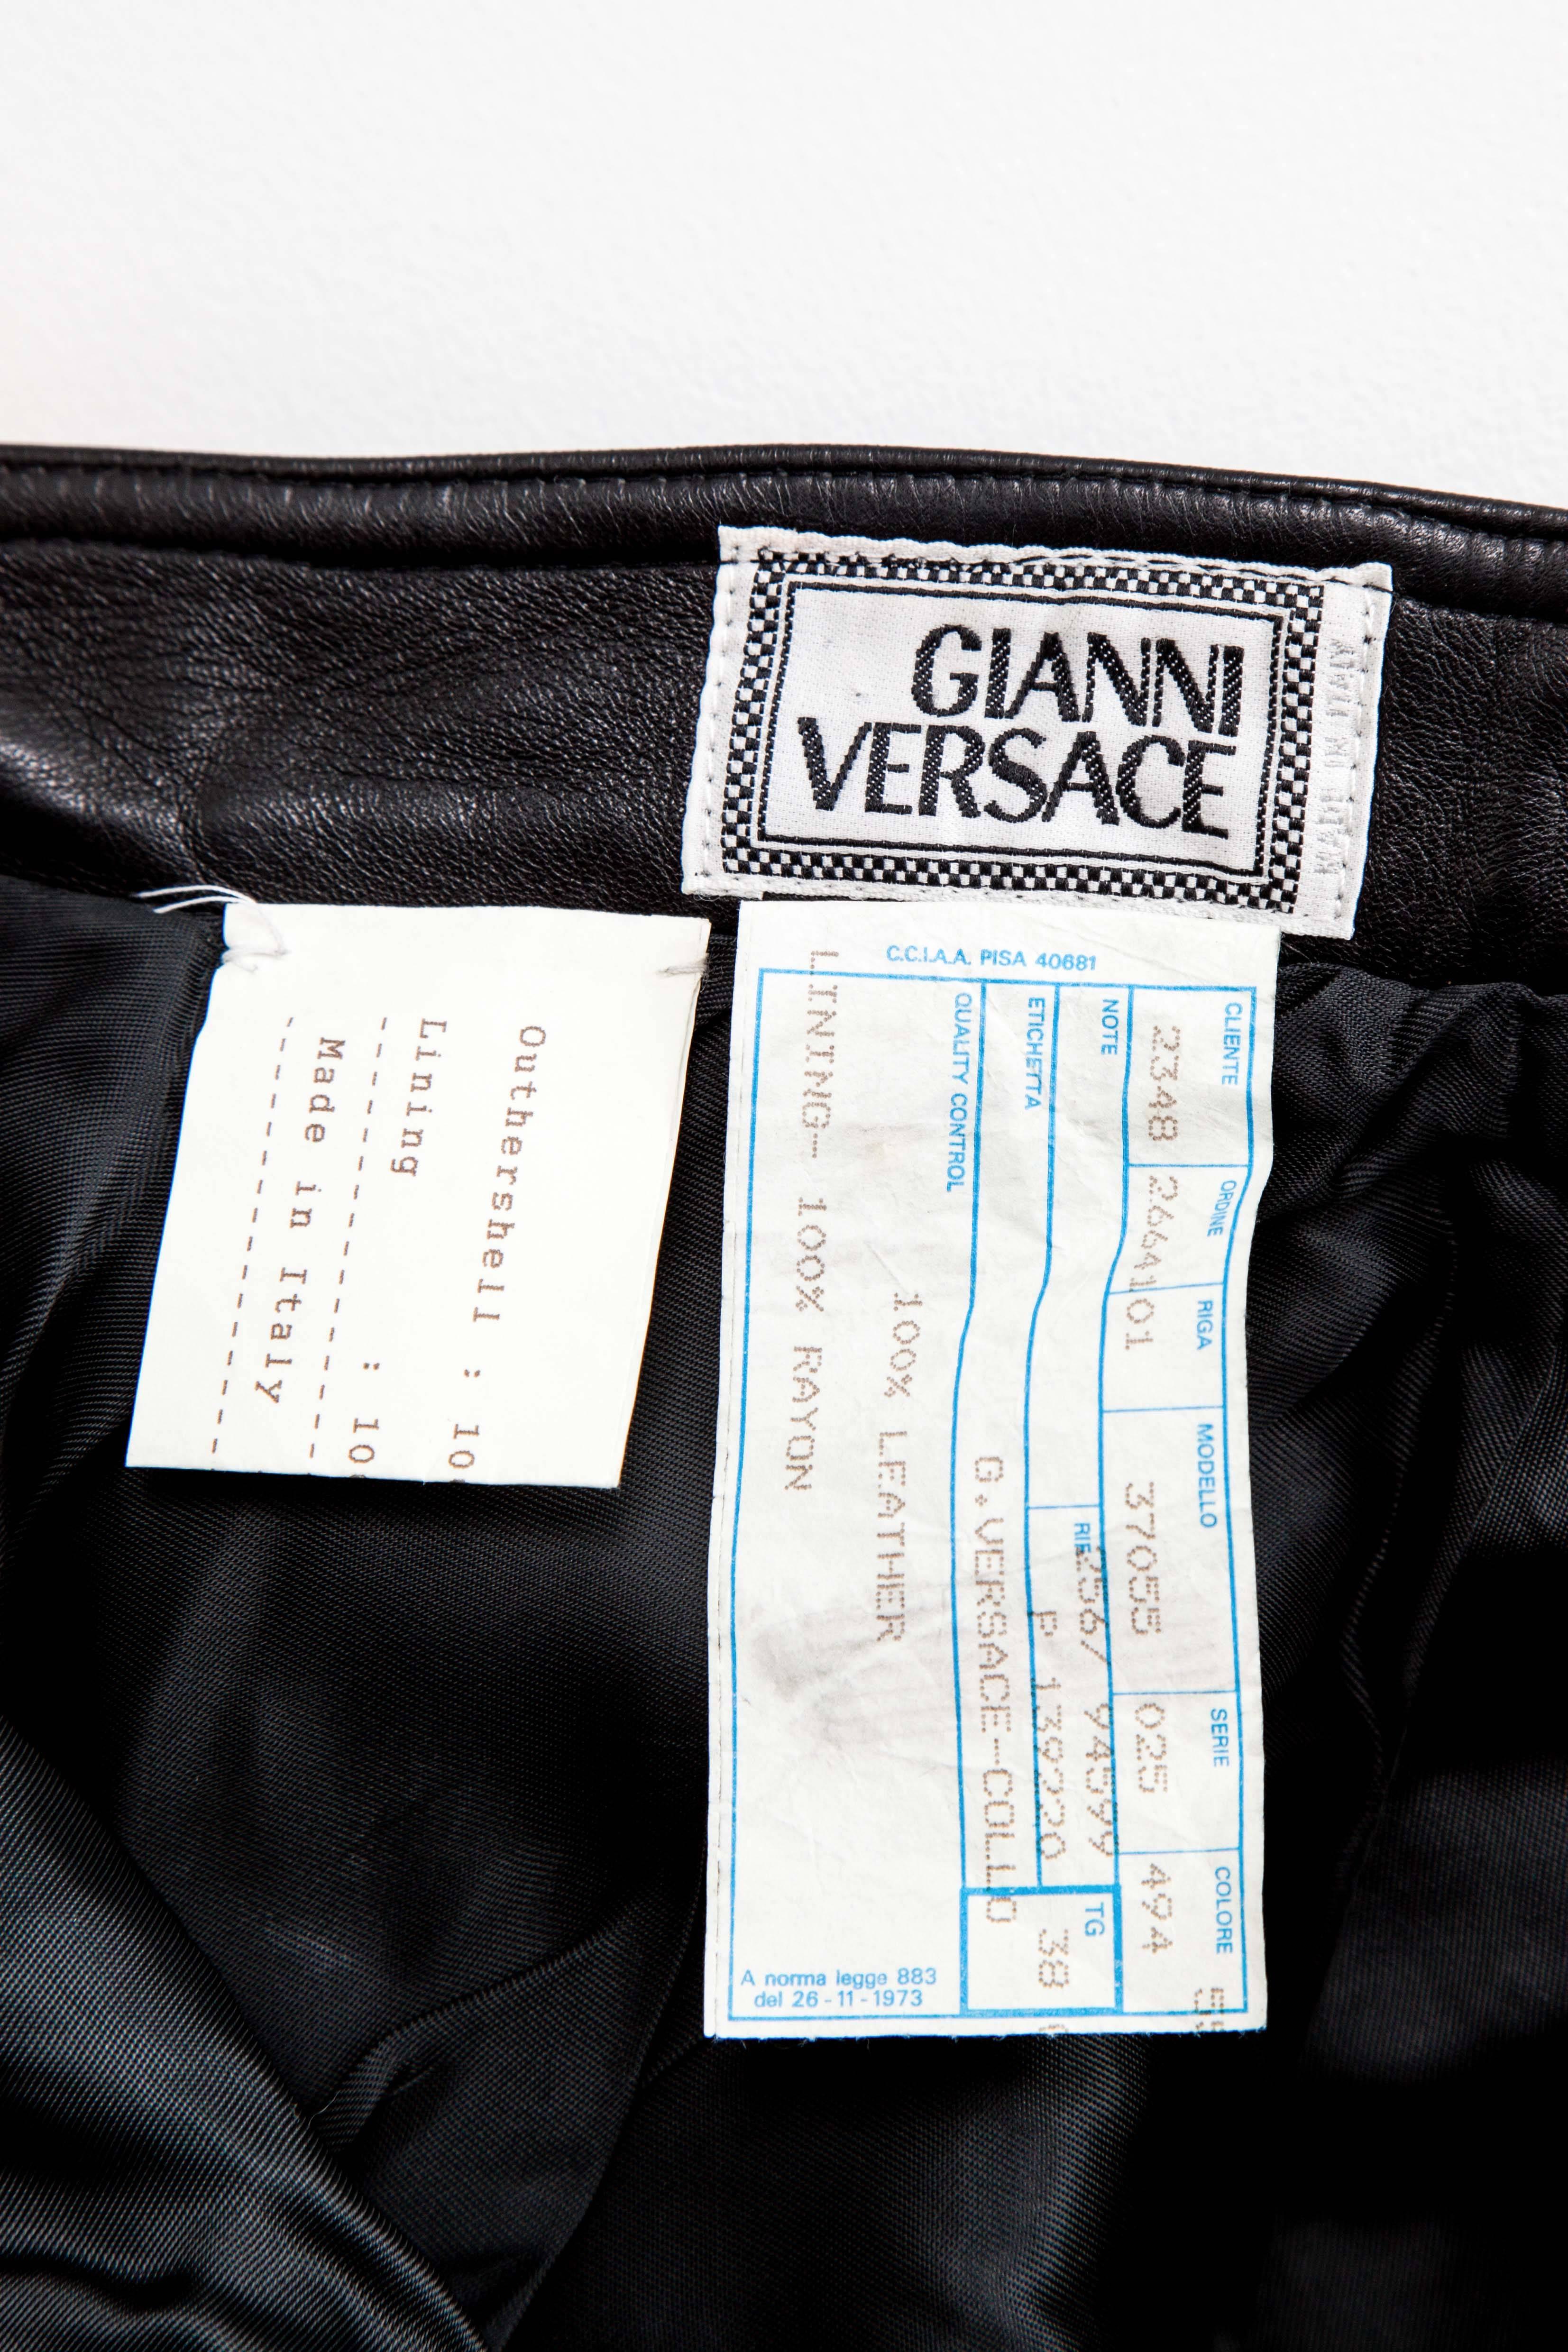 Gianni Versace Iconic 1992 Runway Black Leather Fringe Skirt For Sale 3